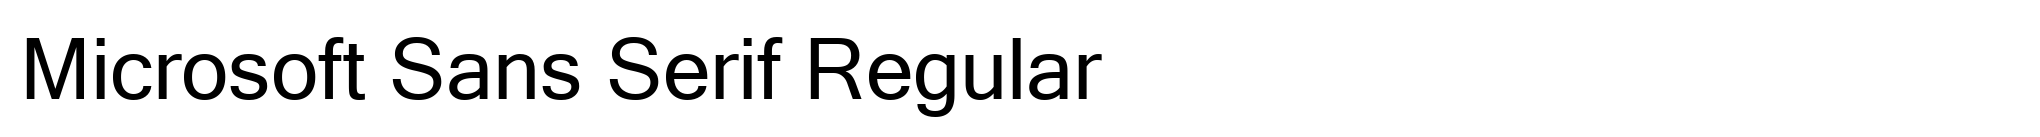 Microsoft Sans Serif Regular image